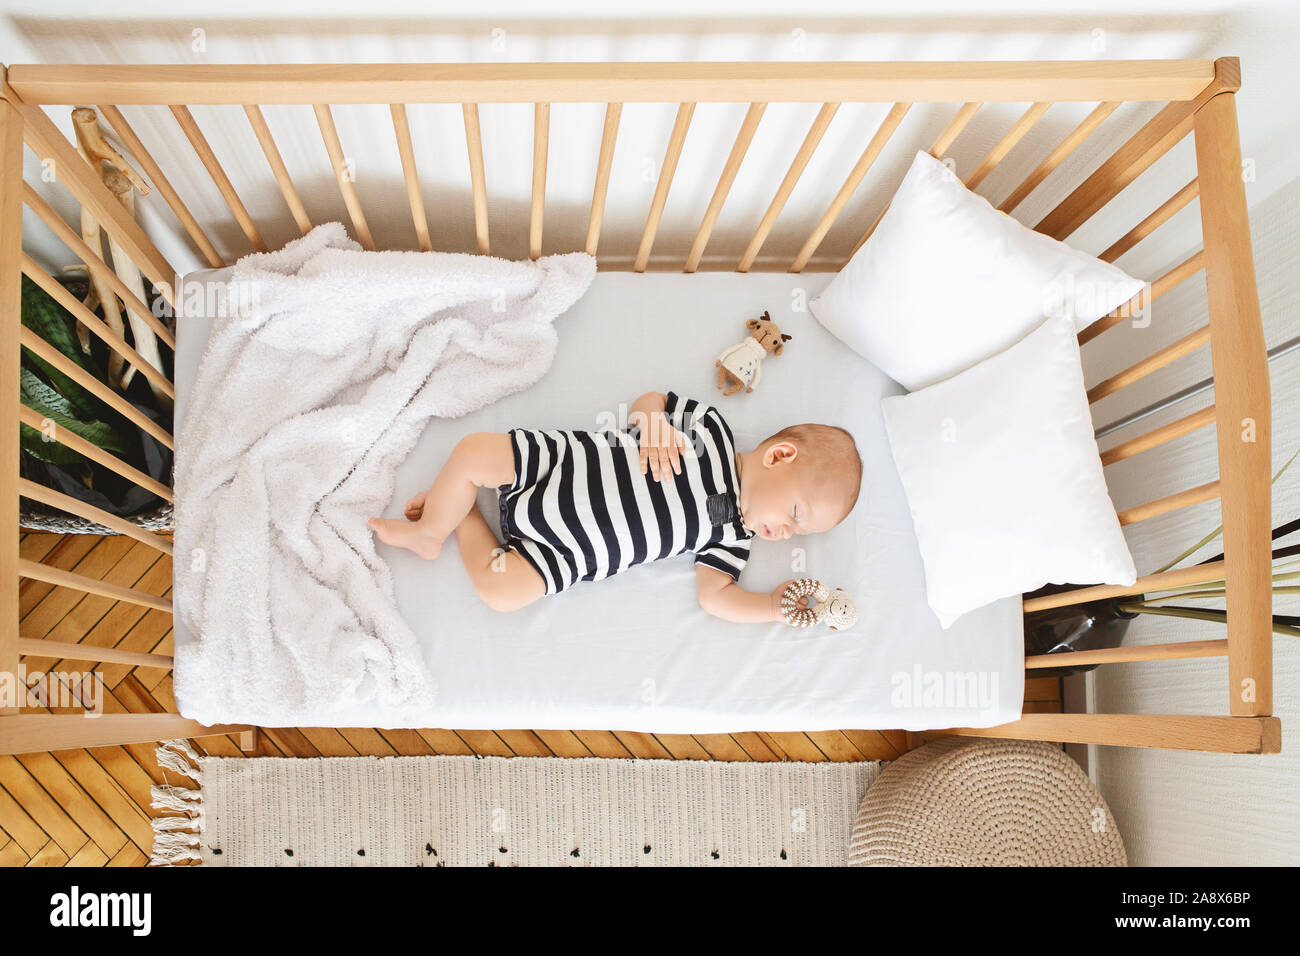 newborn sleeping in cot